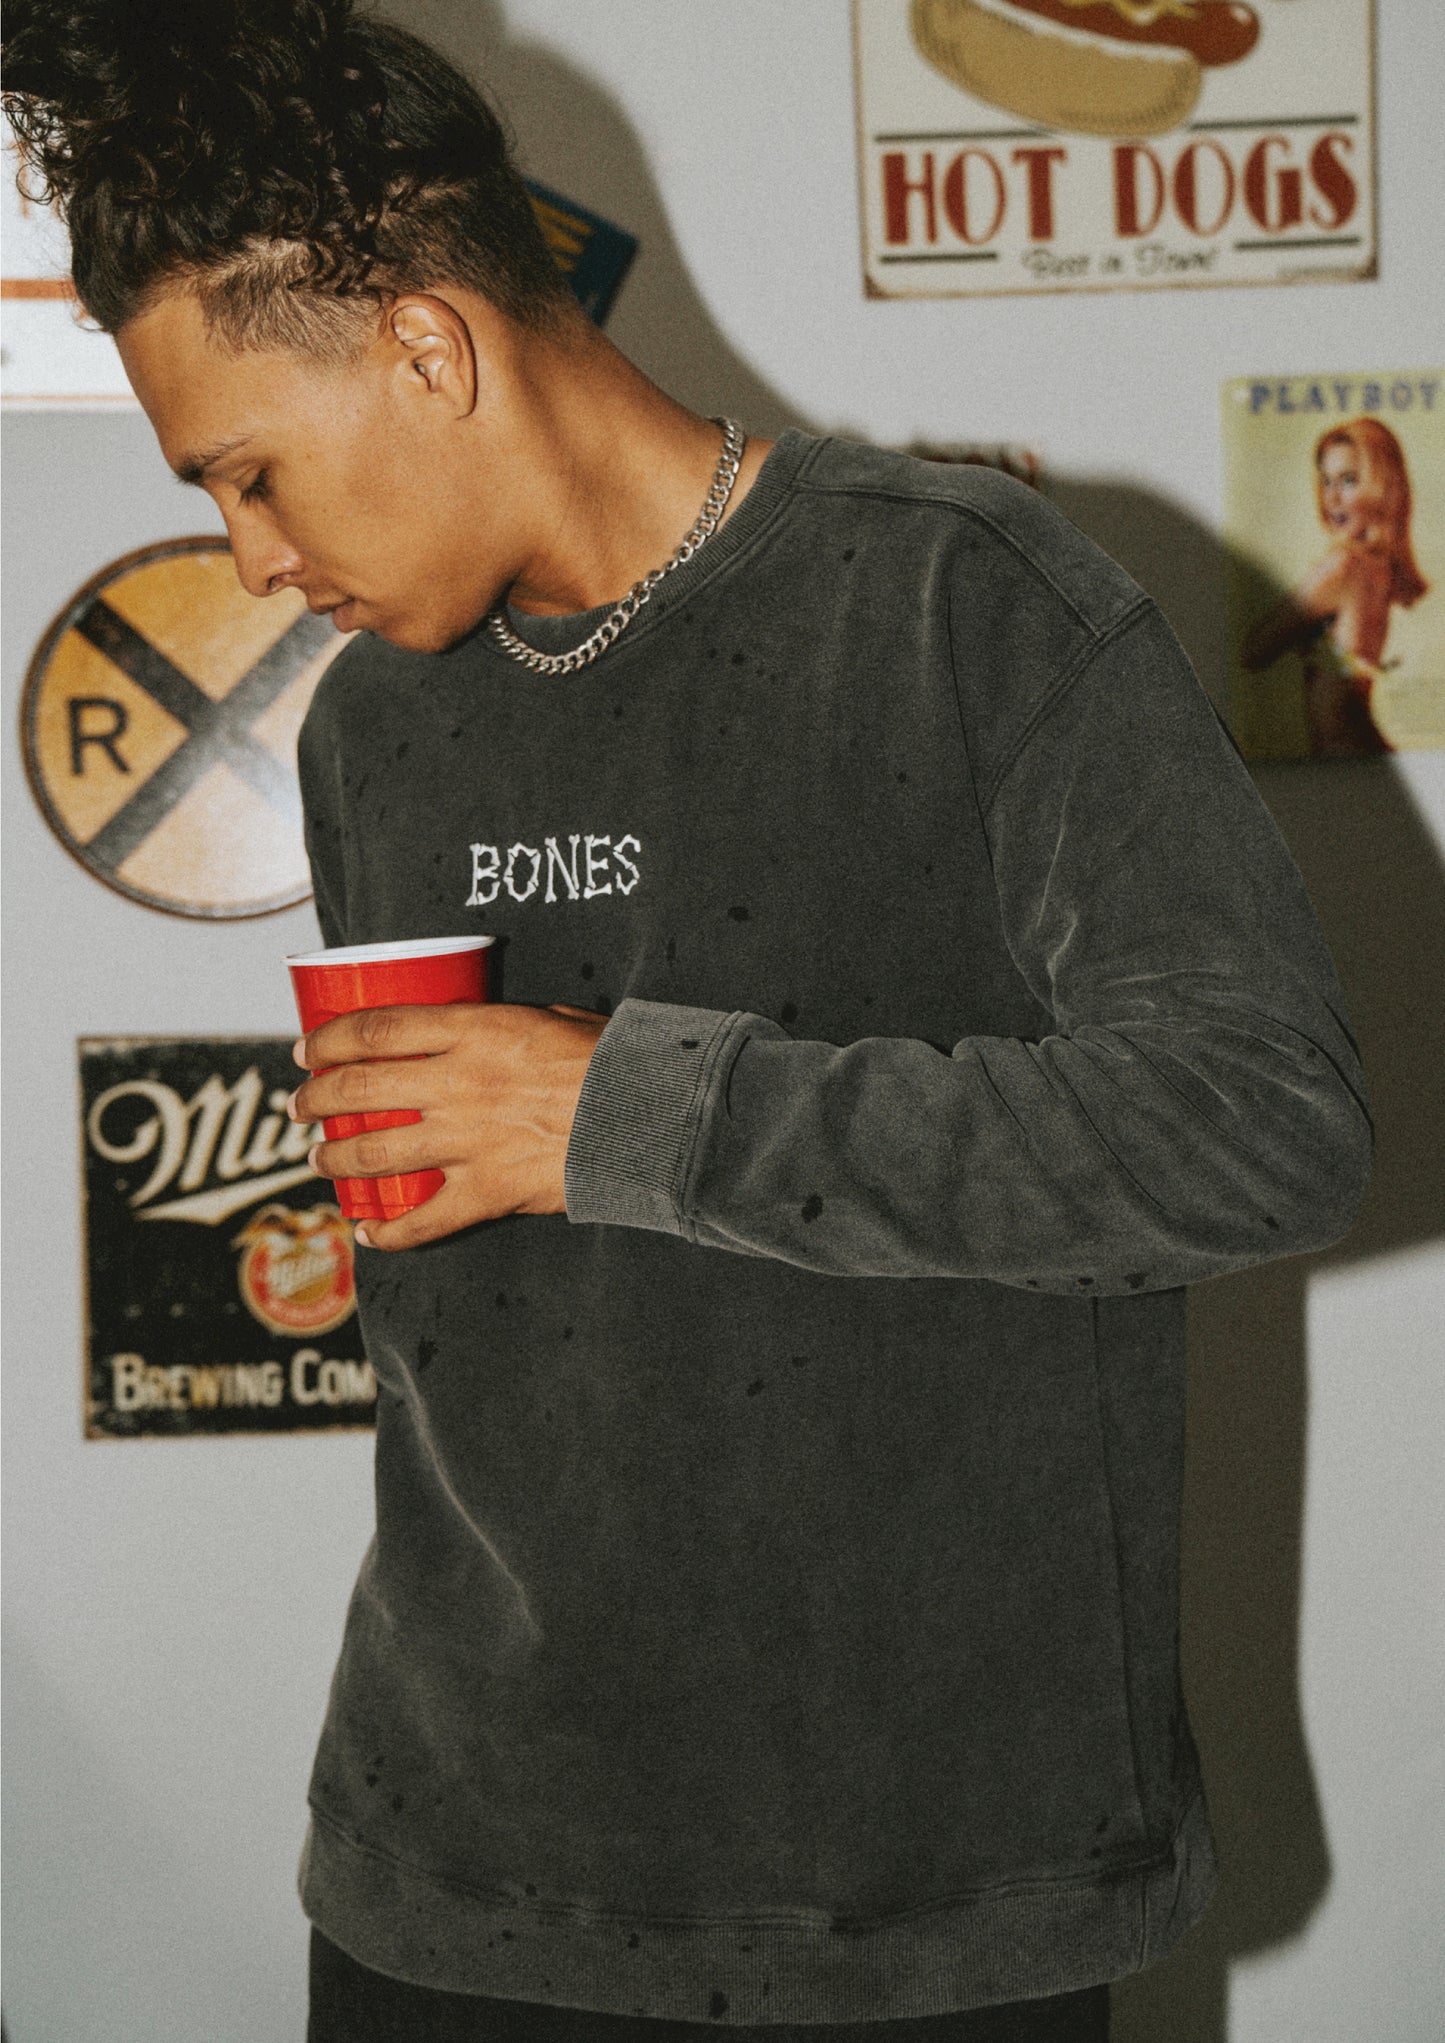 Bones Club Crew Sweater - Washed Black